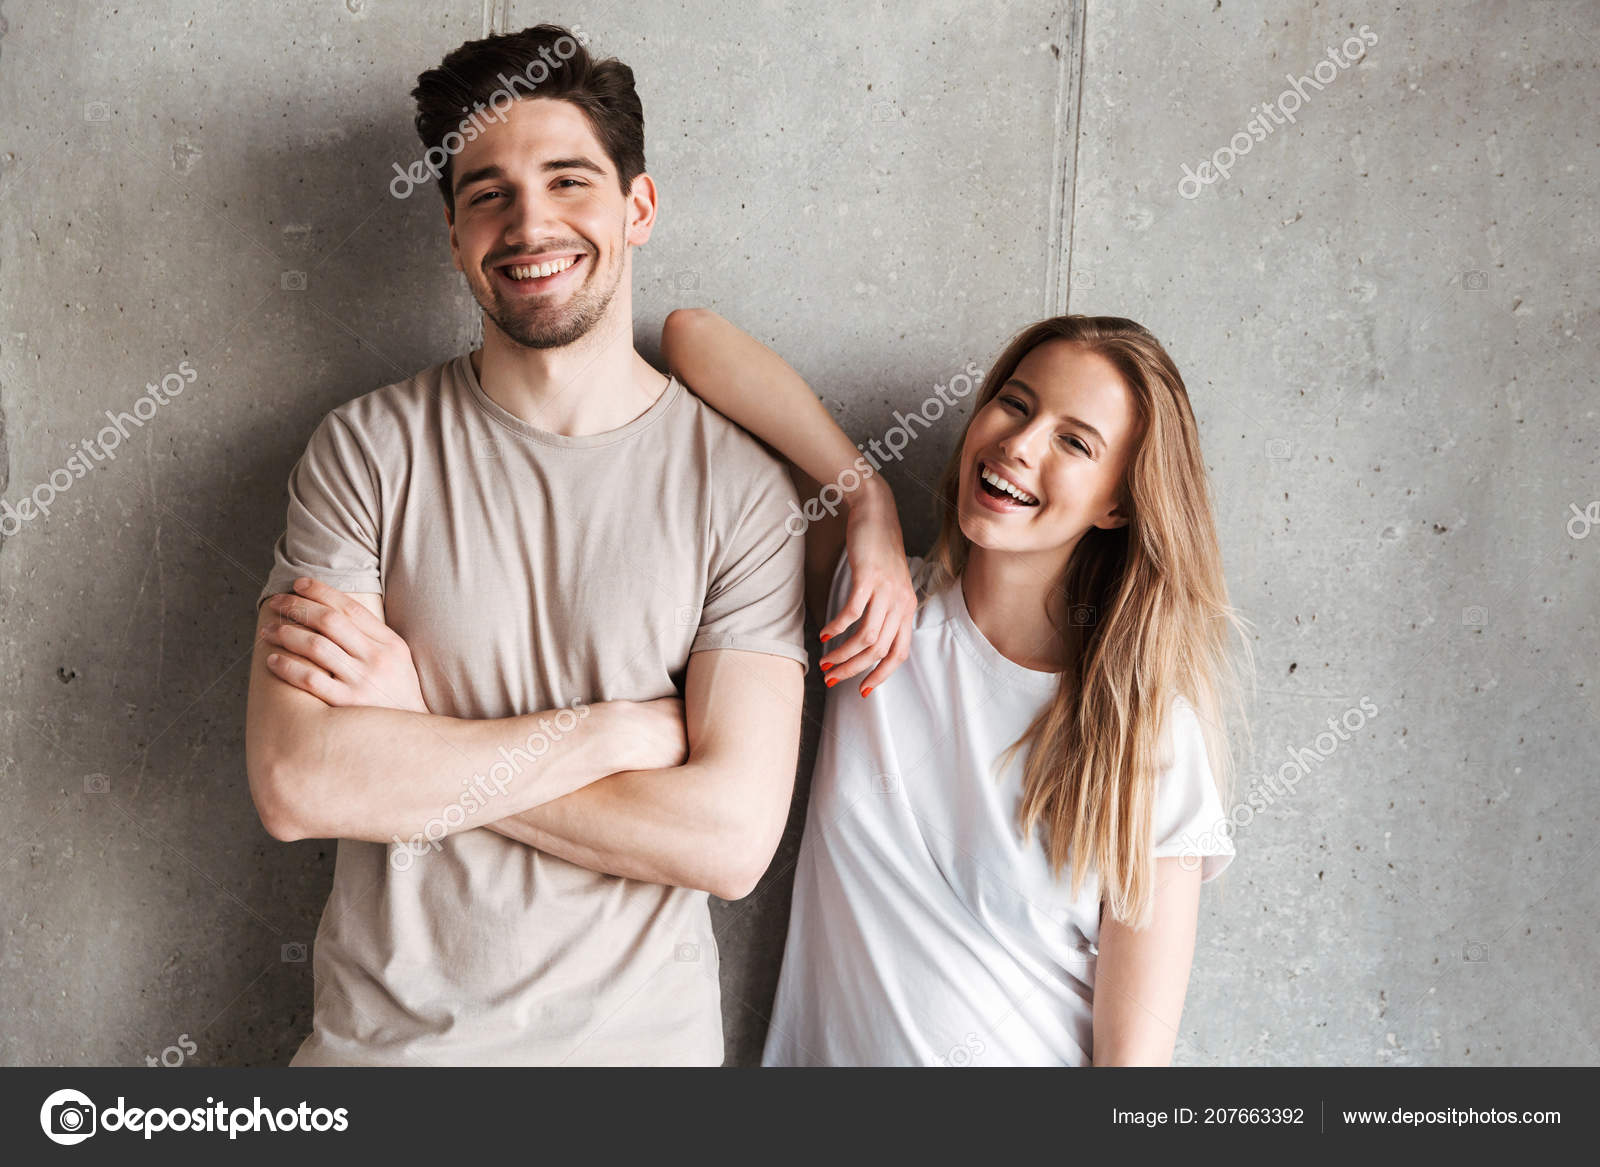 depositphotos 207663392 stock photo portrait adorable caucasian couple man